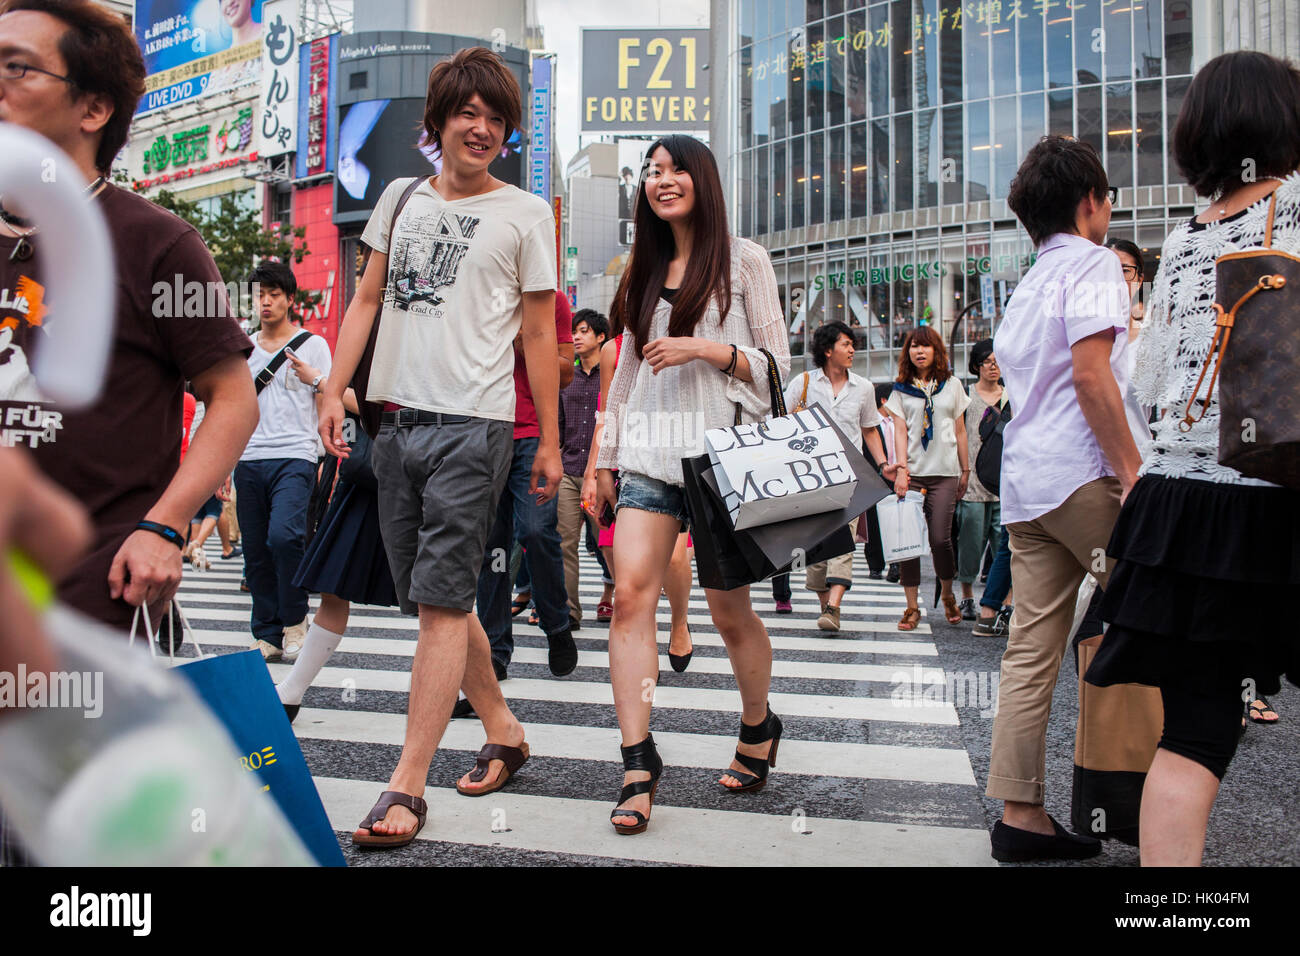 Jüngere Paare, Teenager, Jugendliche, Rush Hour, Shibuya crosswalk Hachiko Square,. Tokyo City, Japan, Asien Stockfoto